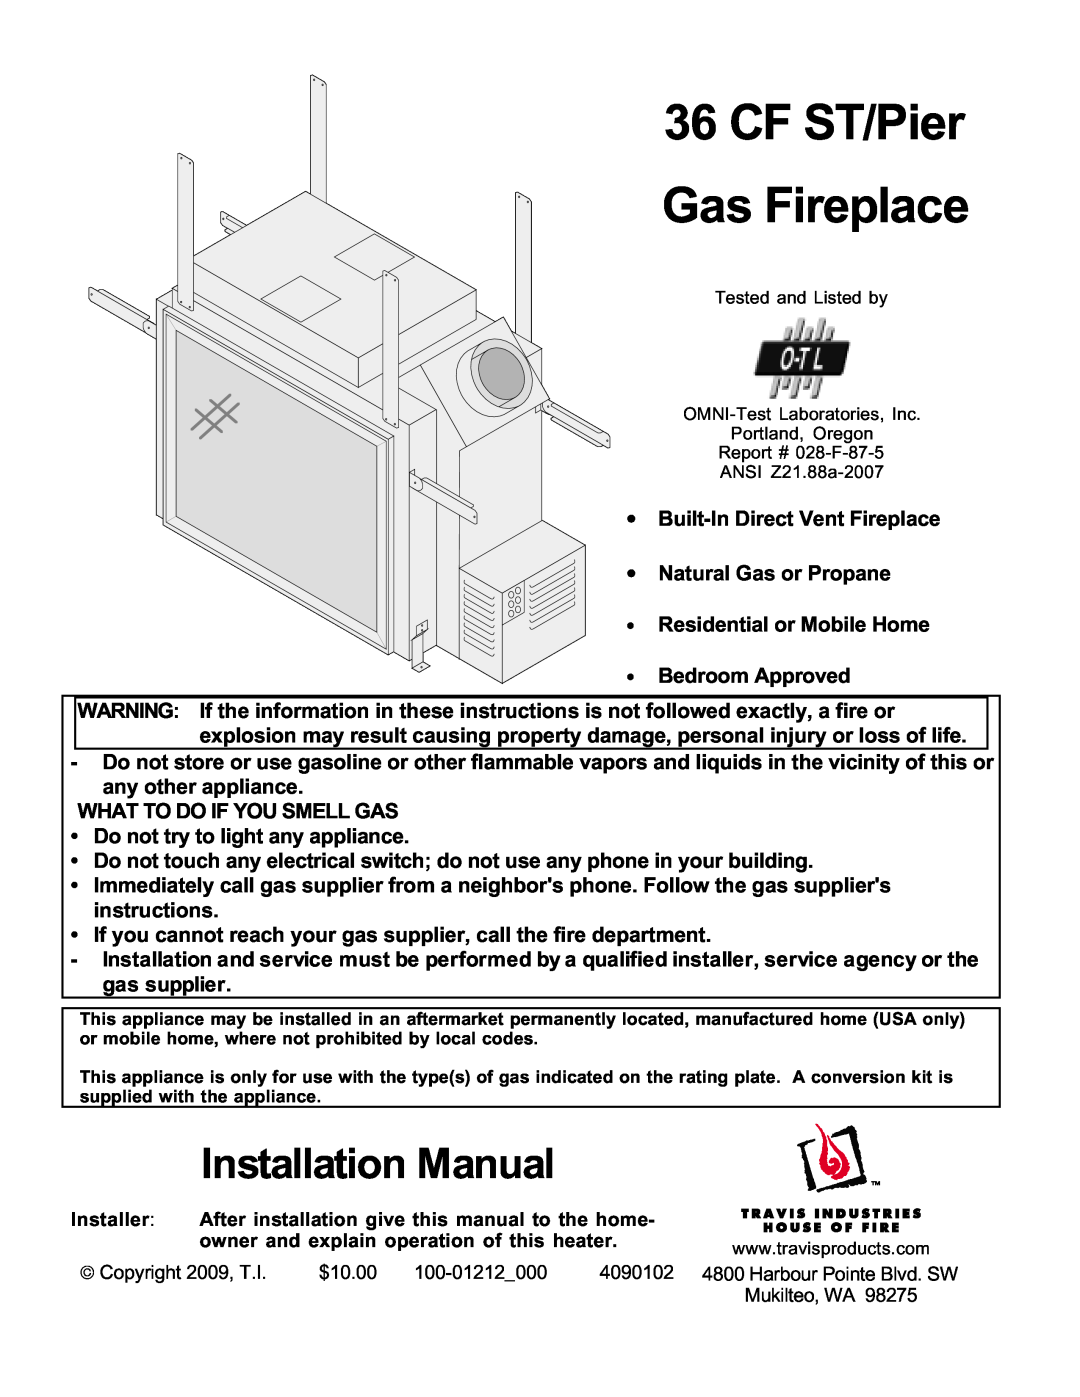 FireplaceXtrordinair 36CF installation manual Built-InDirect Vent Fireplace, Natural Gas or Propane, Installation Manual 